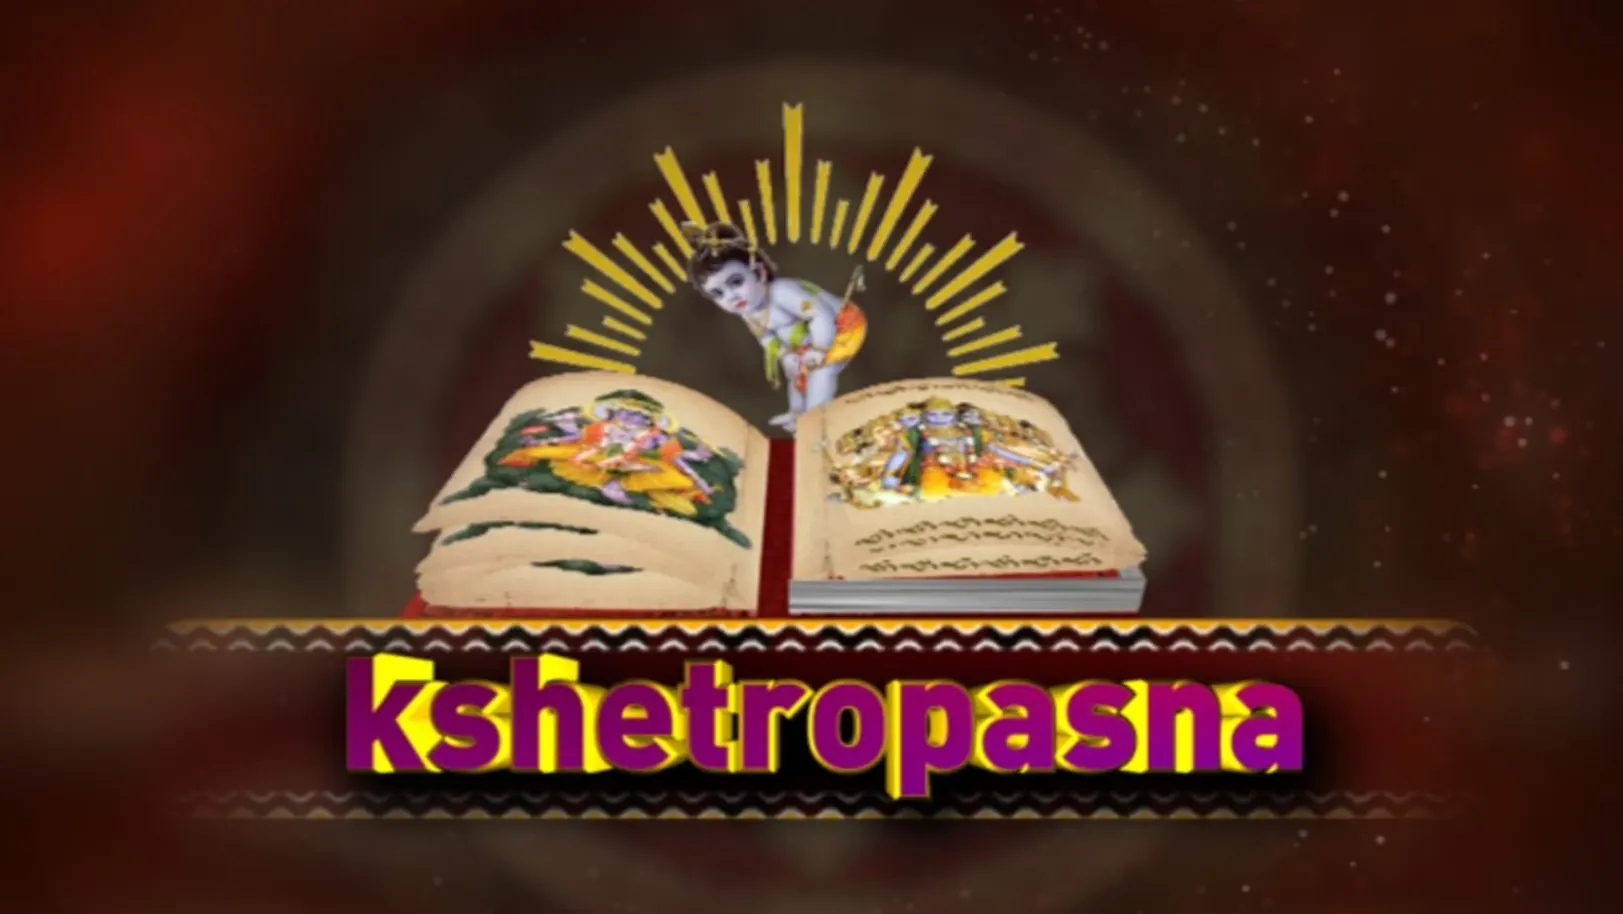 Kshetropasna Streaming Now On Aastha Tamil